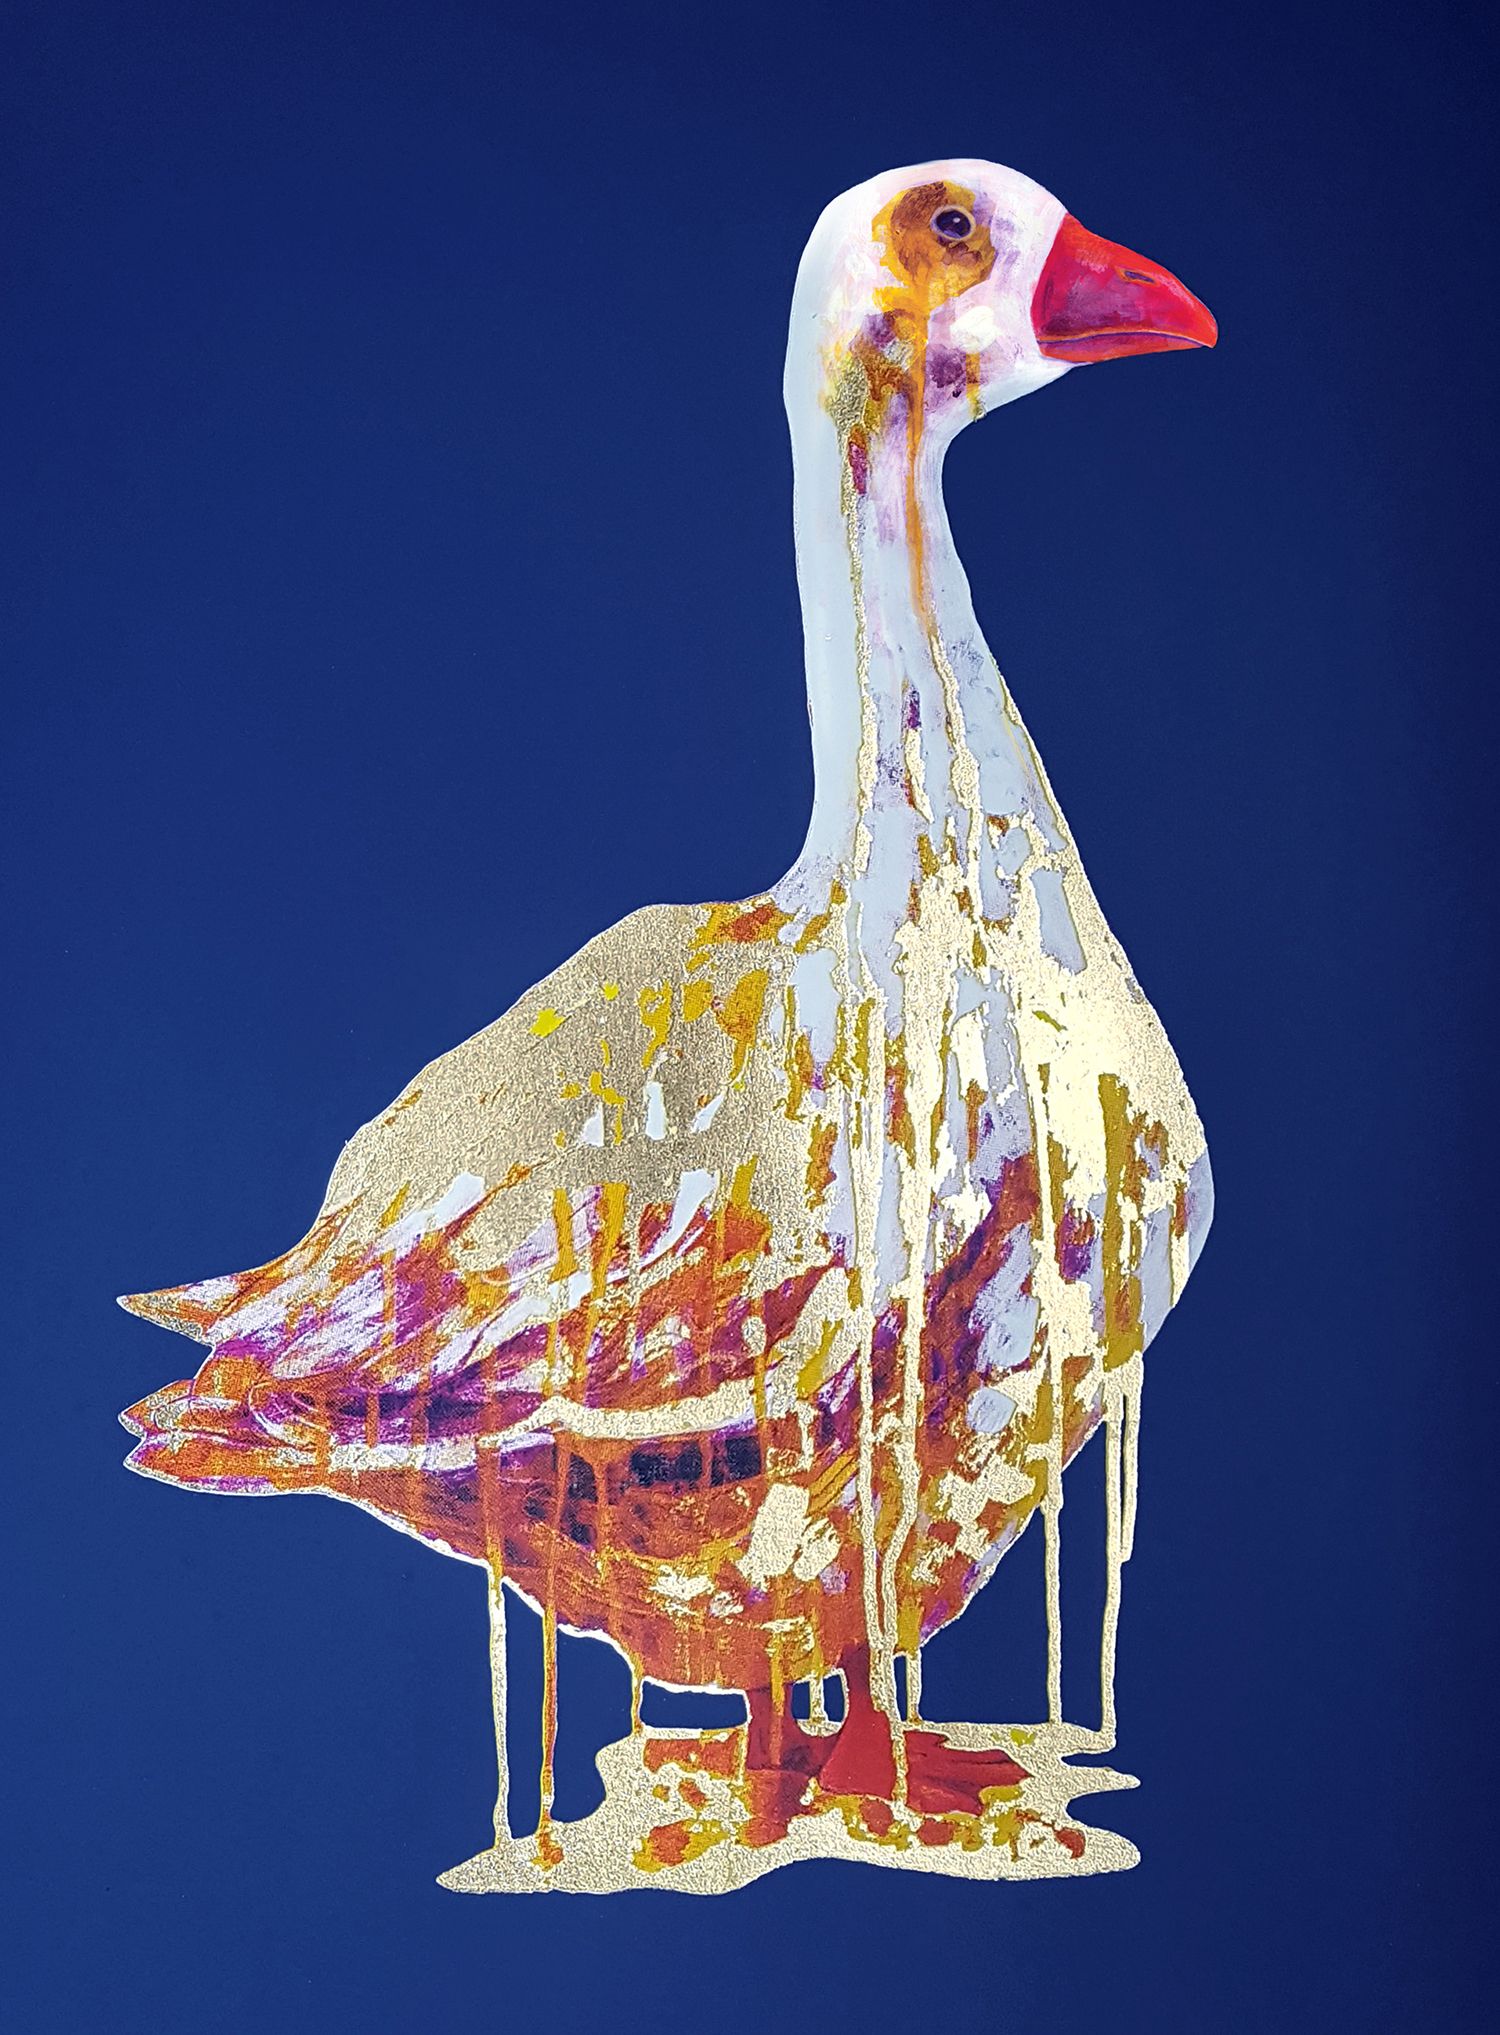 The Golden Goose by Gavin Dobson